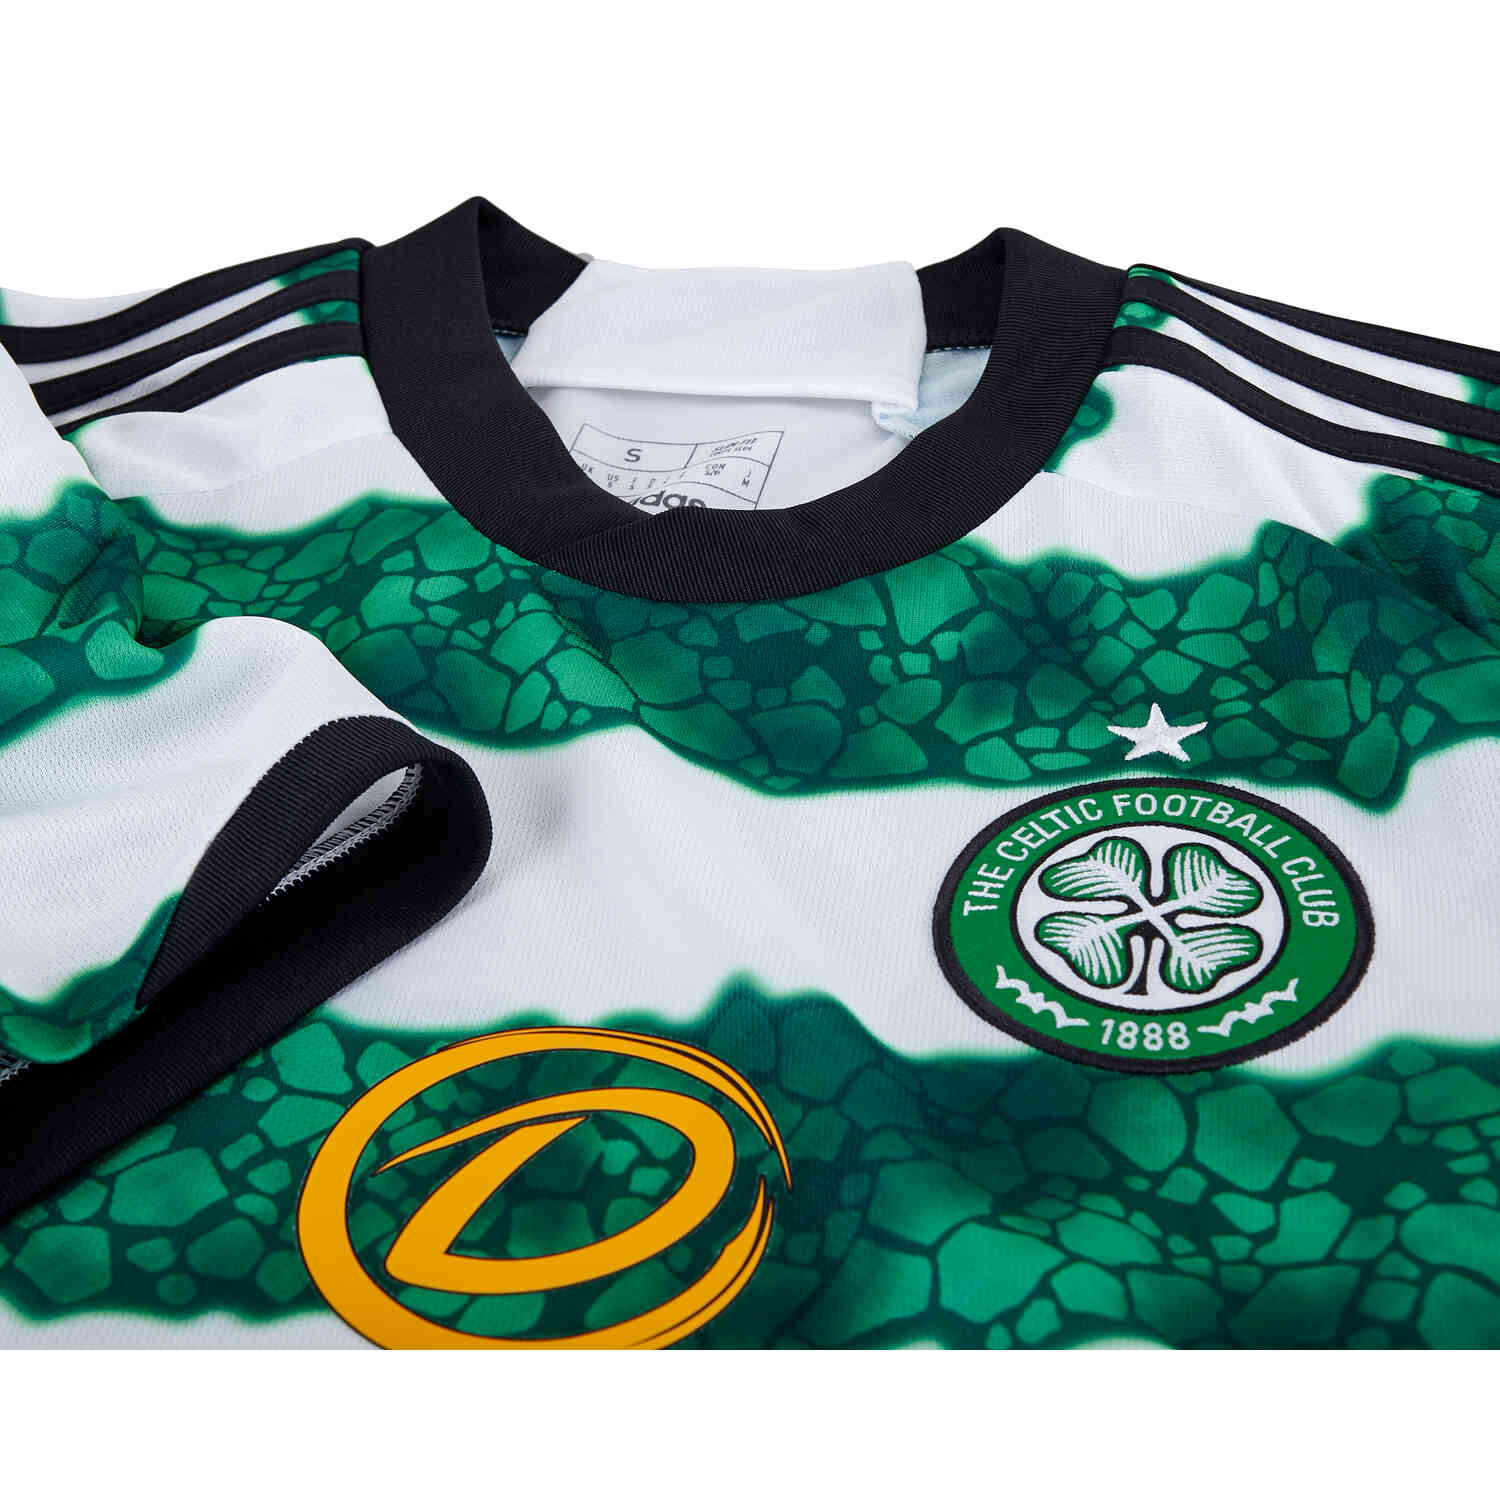 Adidas Men's Celtic FC Third Jersey 23/24 Green/Green / L